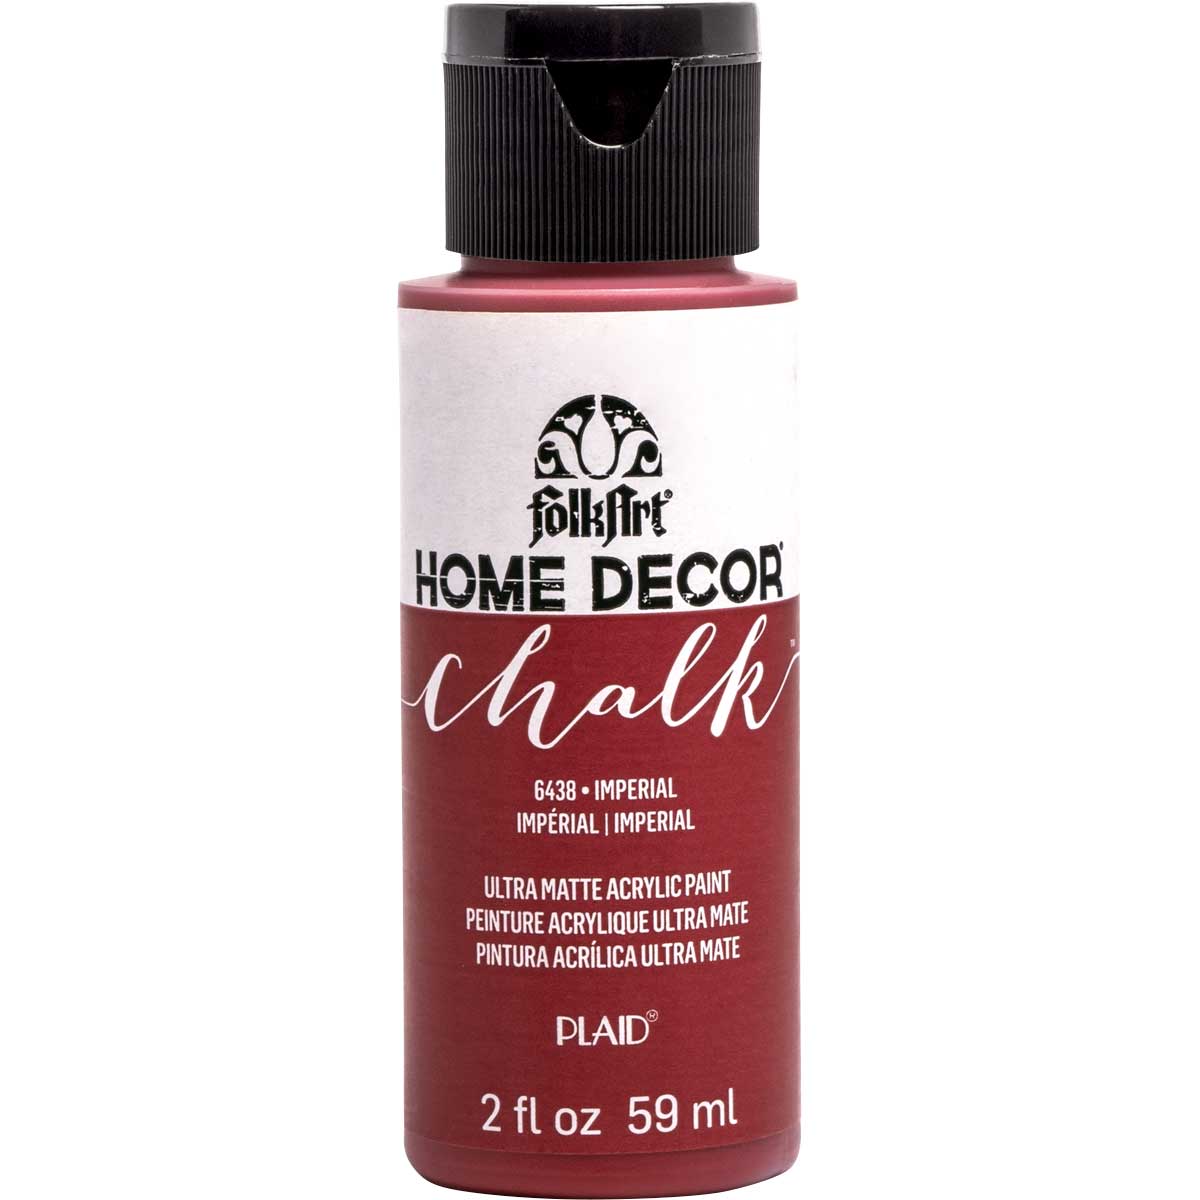 FolkArt Home Decor Chalk - Imperial, 2 oz. - 6438